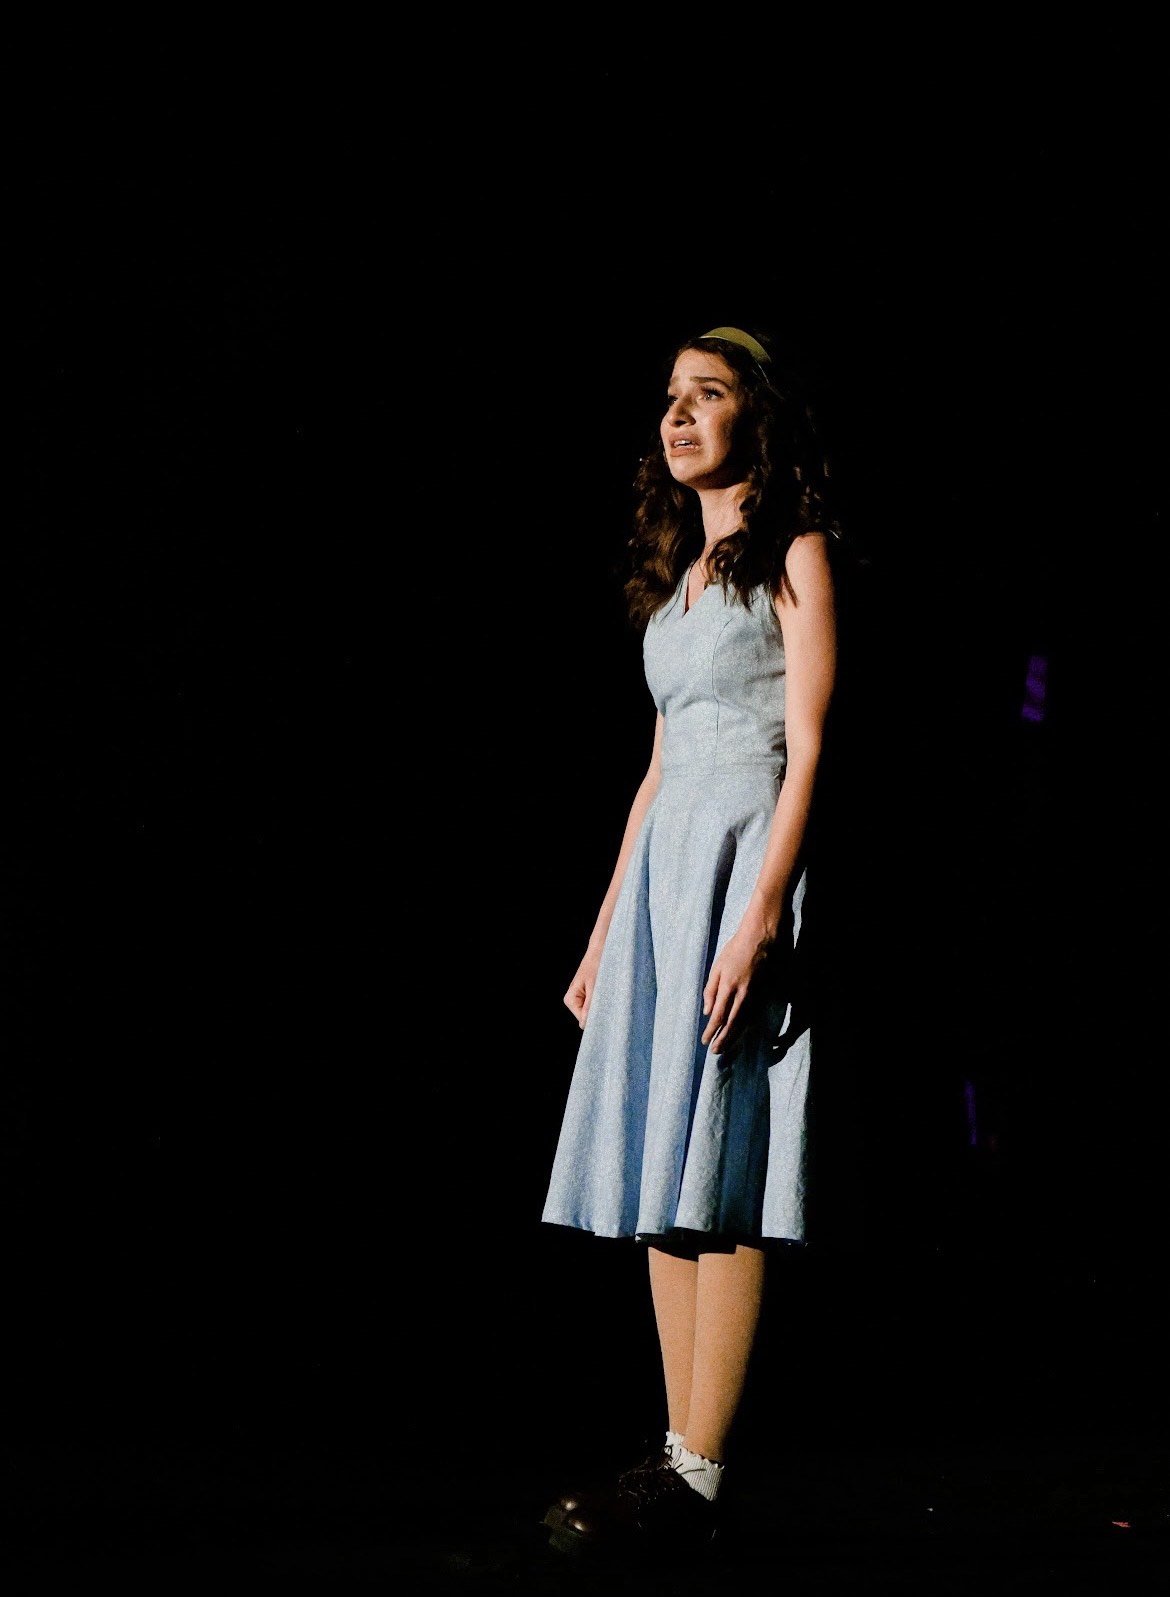 Rachel's performance as Miss Honey in Matilda